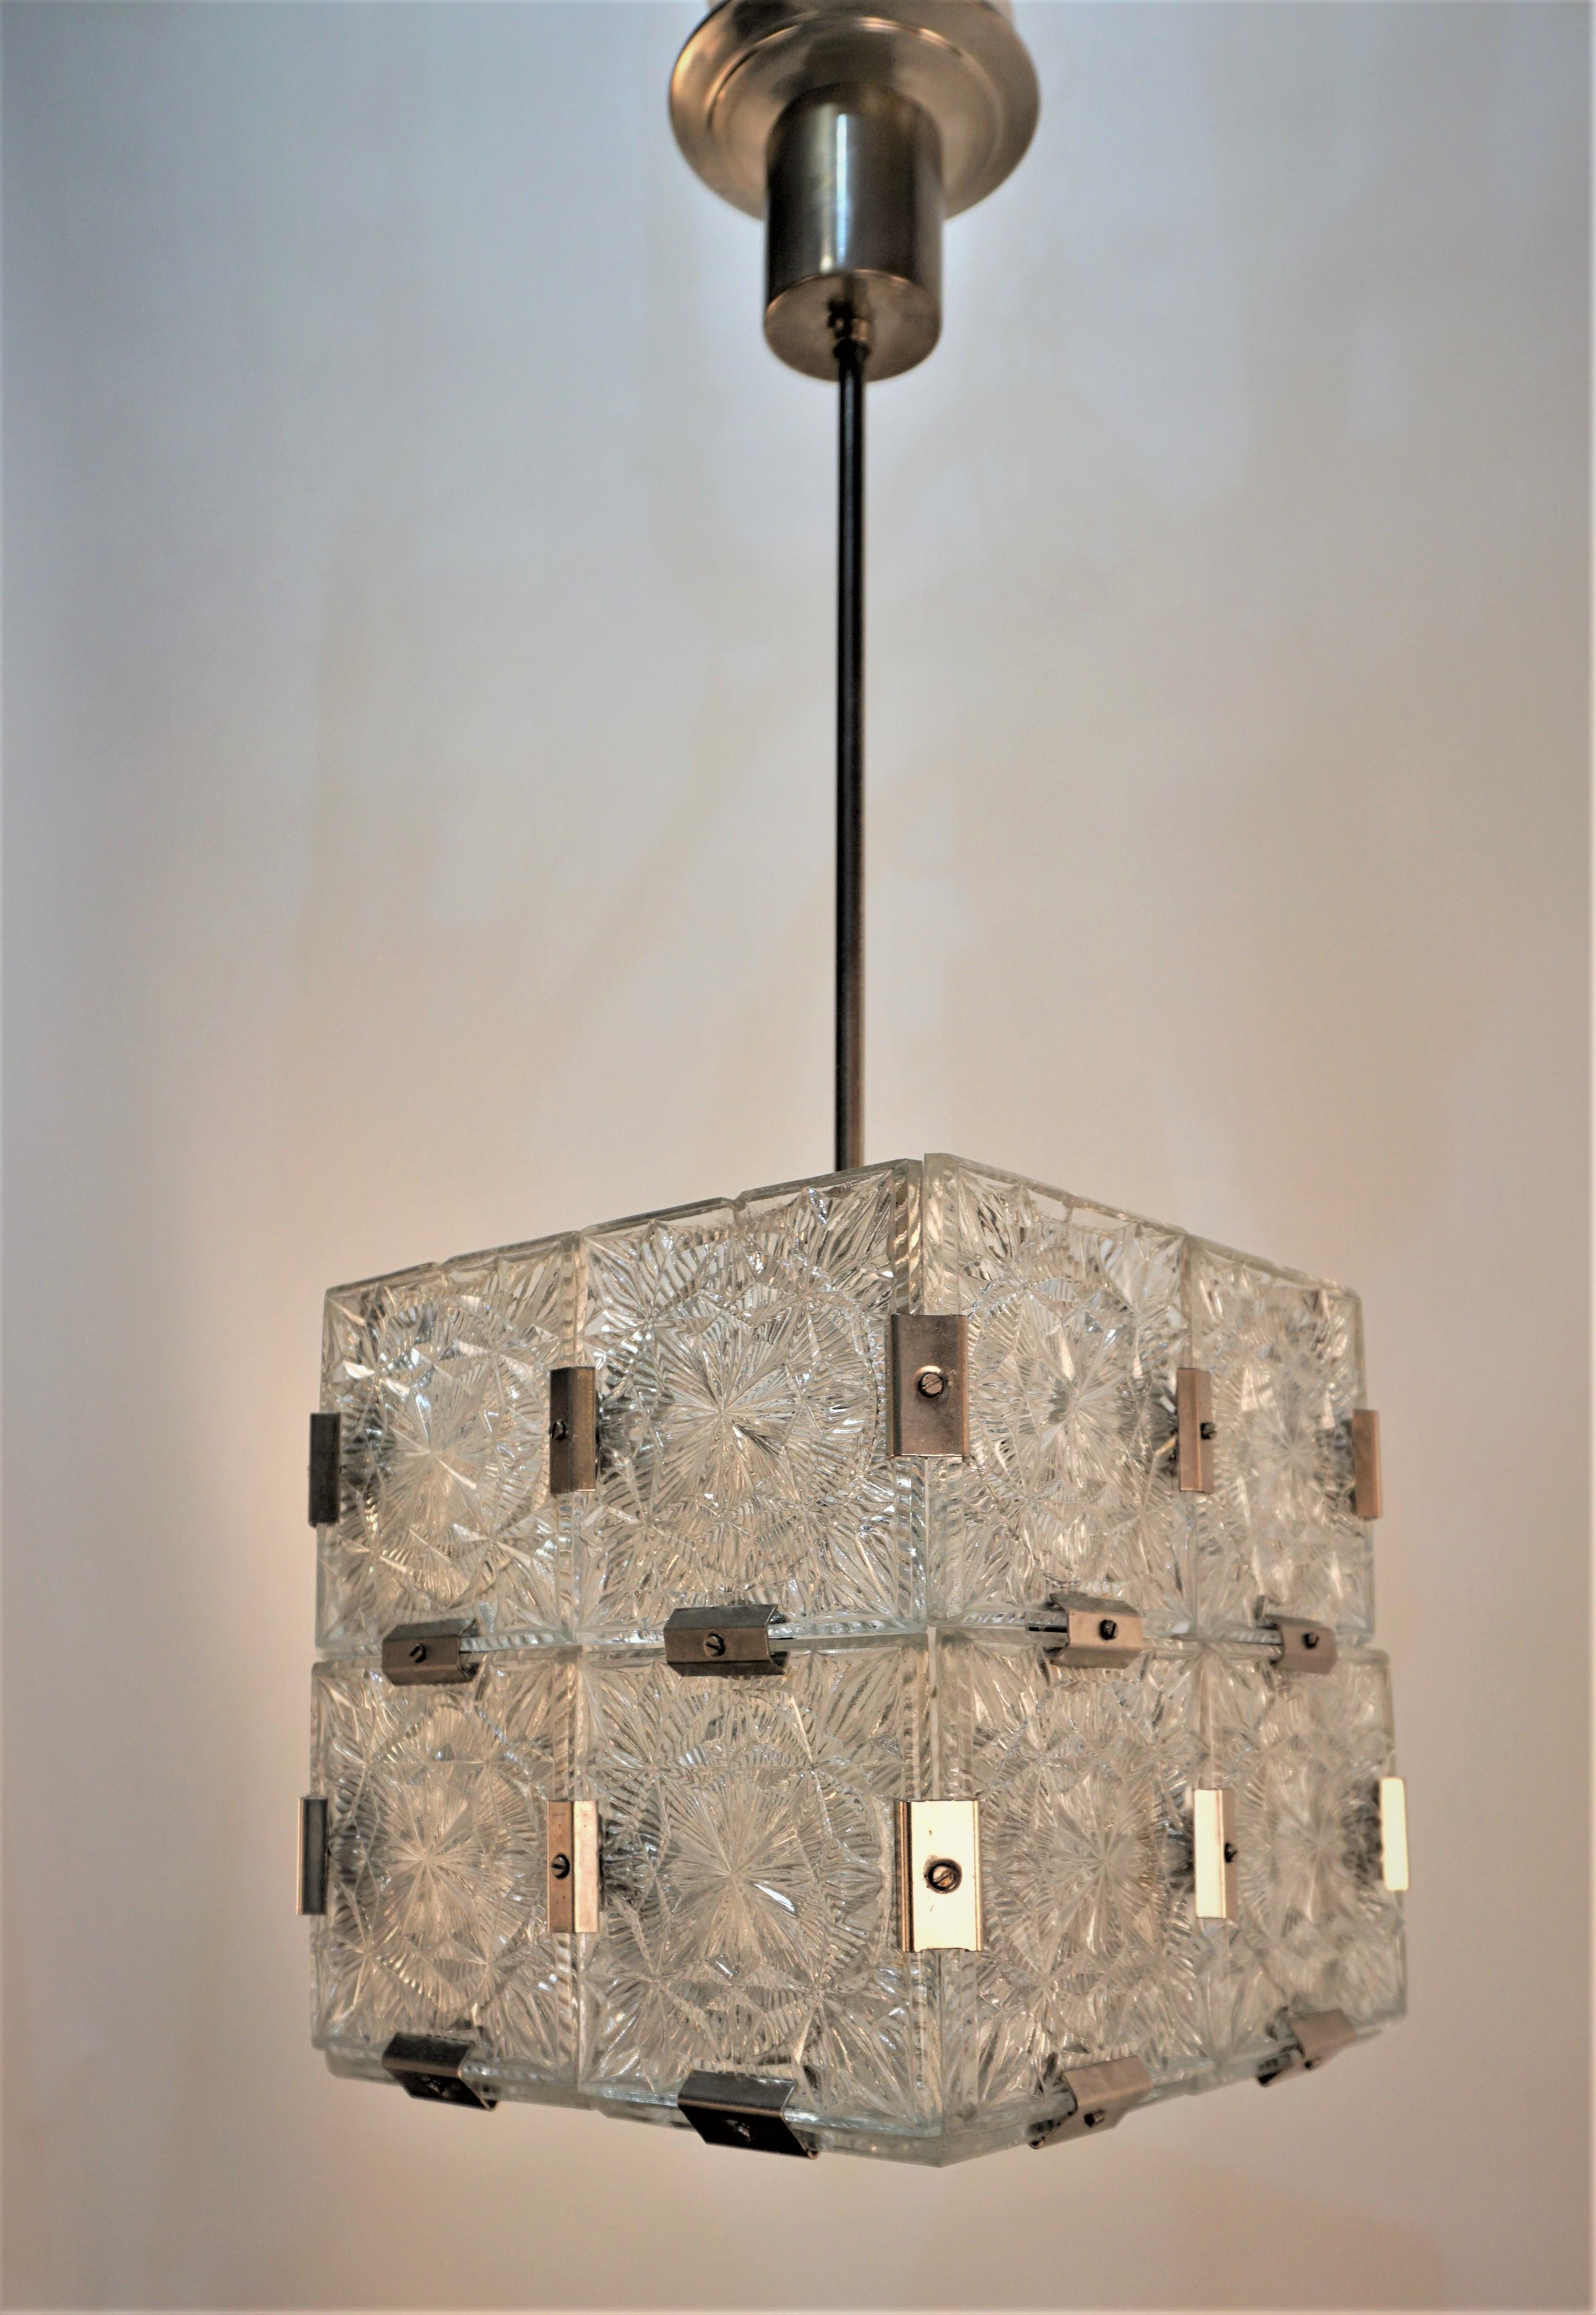 Kamenicky cube glass 1960's modernist Glass Pendant Chandelier #1 For Sale 2